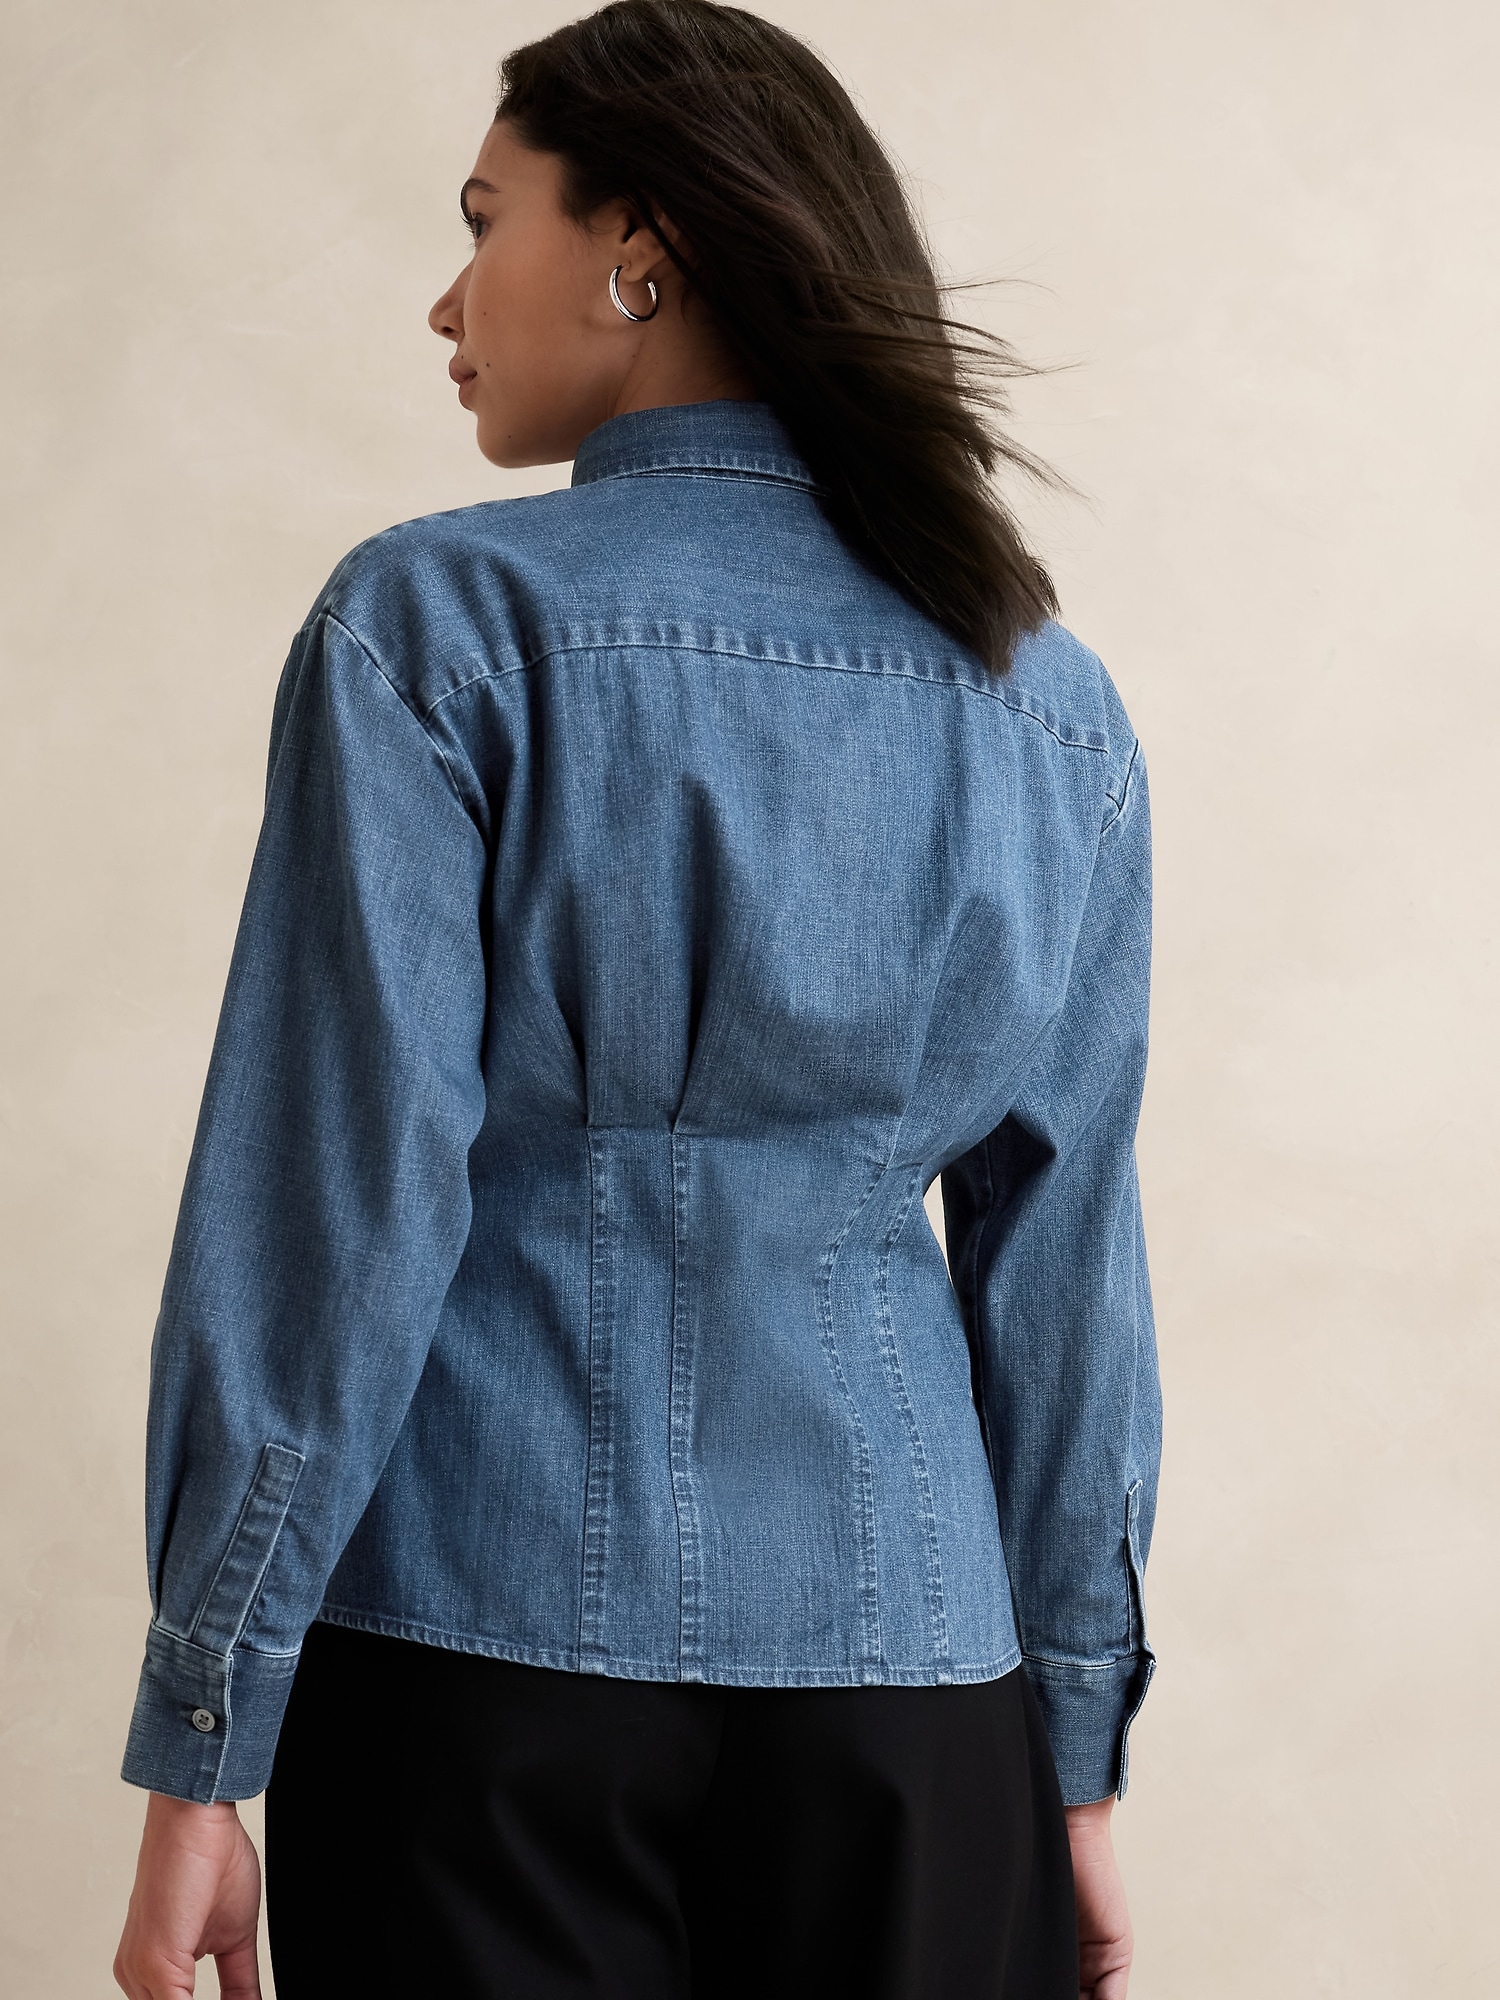 XFLWAM Women's Button Down Denim Shirt Collared Casual Puff Long Sleeve  Pocket Tops Gray S - Walmart.com